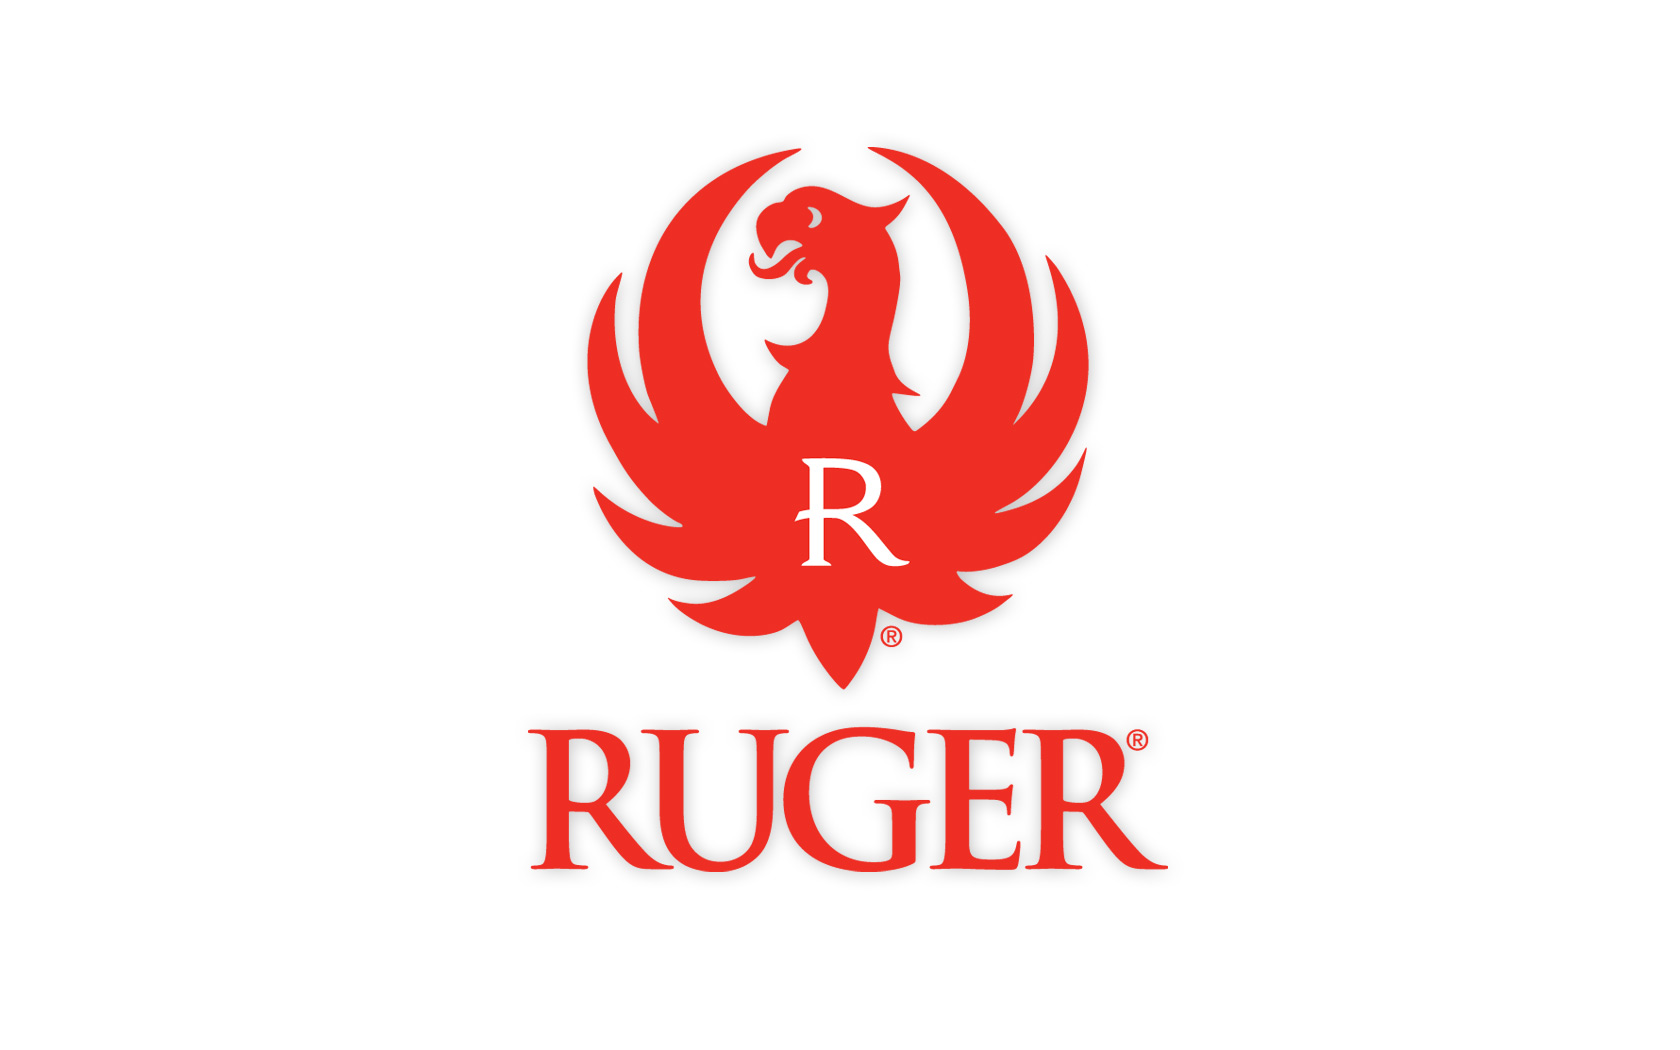 Ruger Red and White Logo Desktop Backgrounds Pinterest